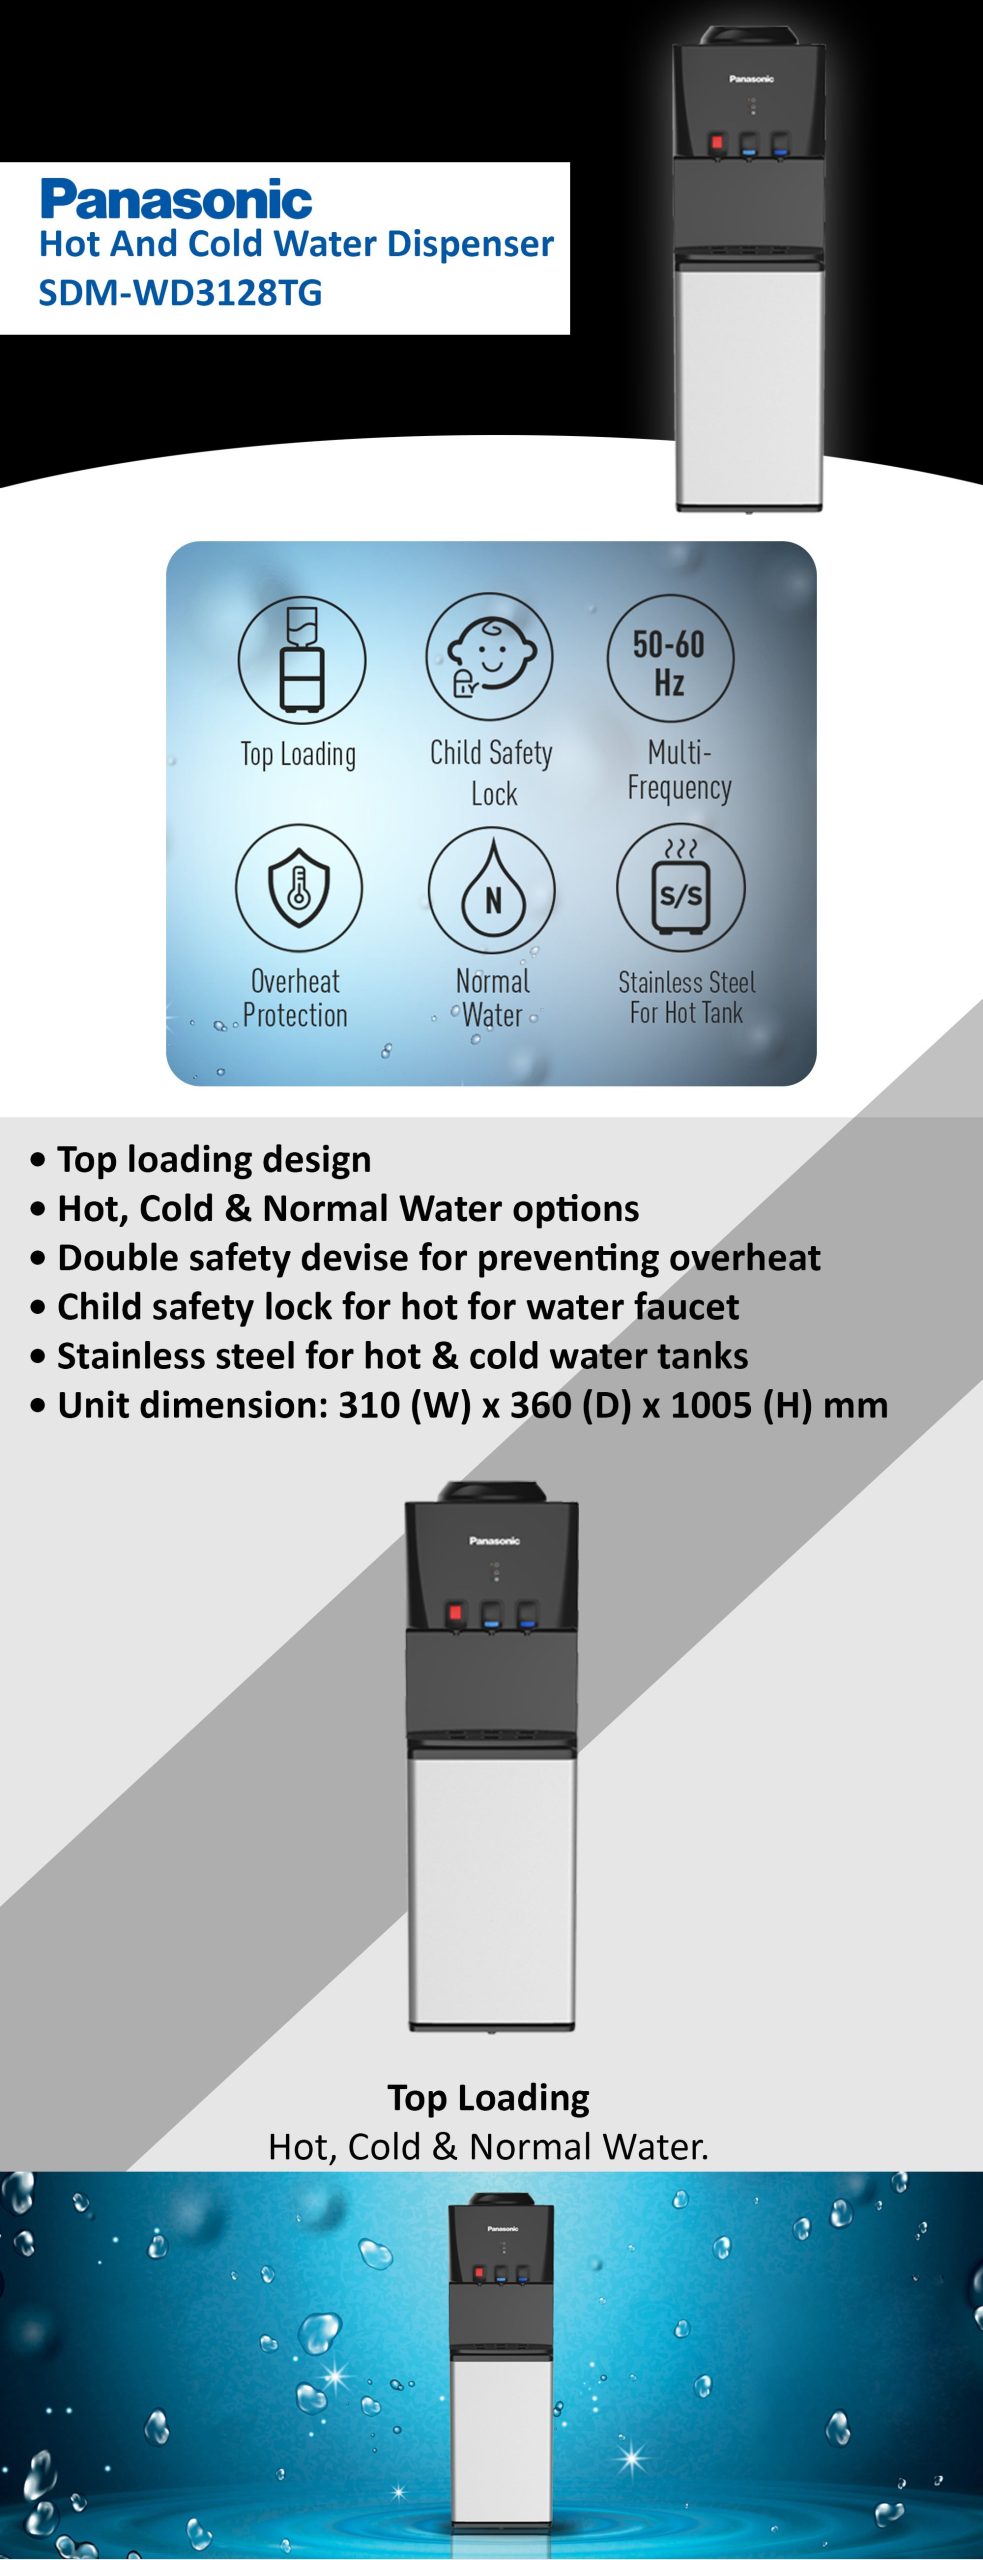 Panasonic SDM-WD3128TG/T | Top Loading Water Dispenser